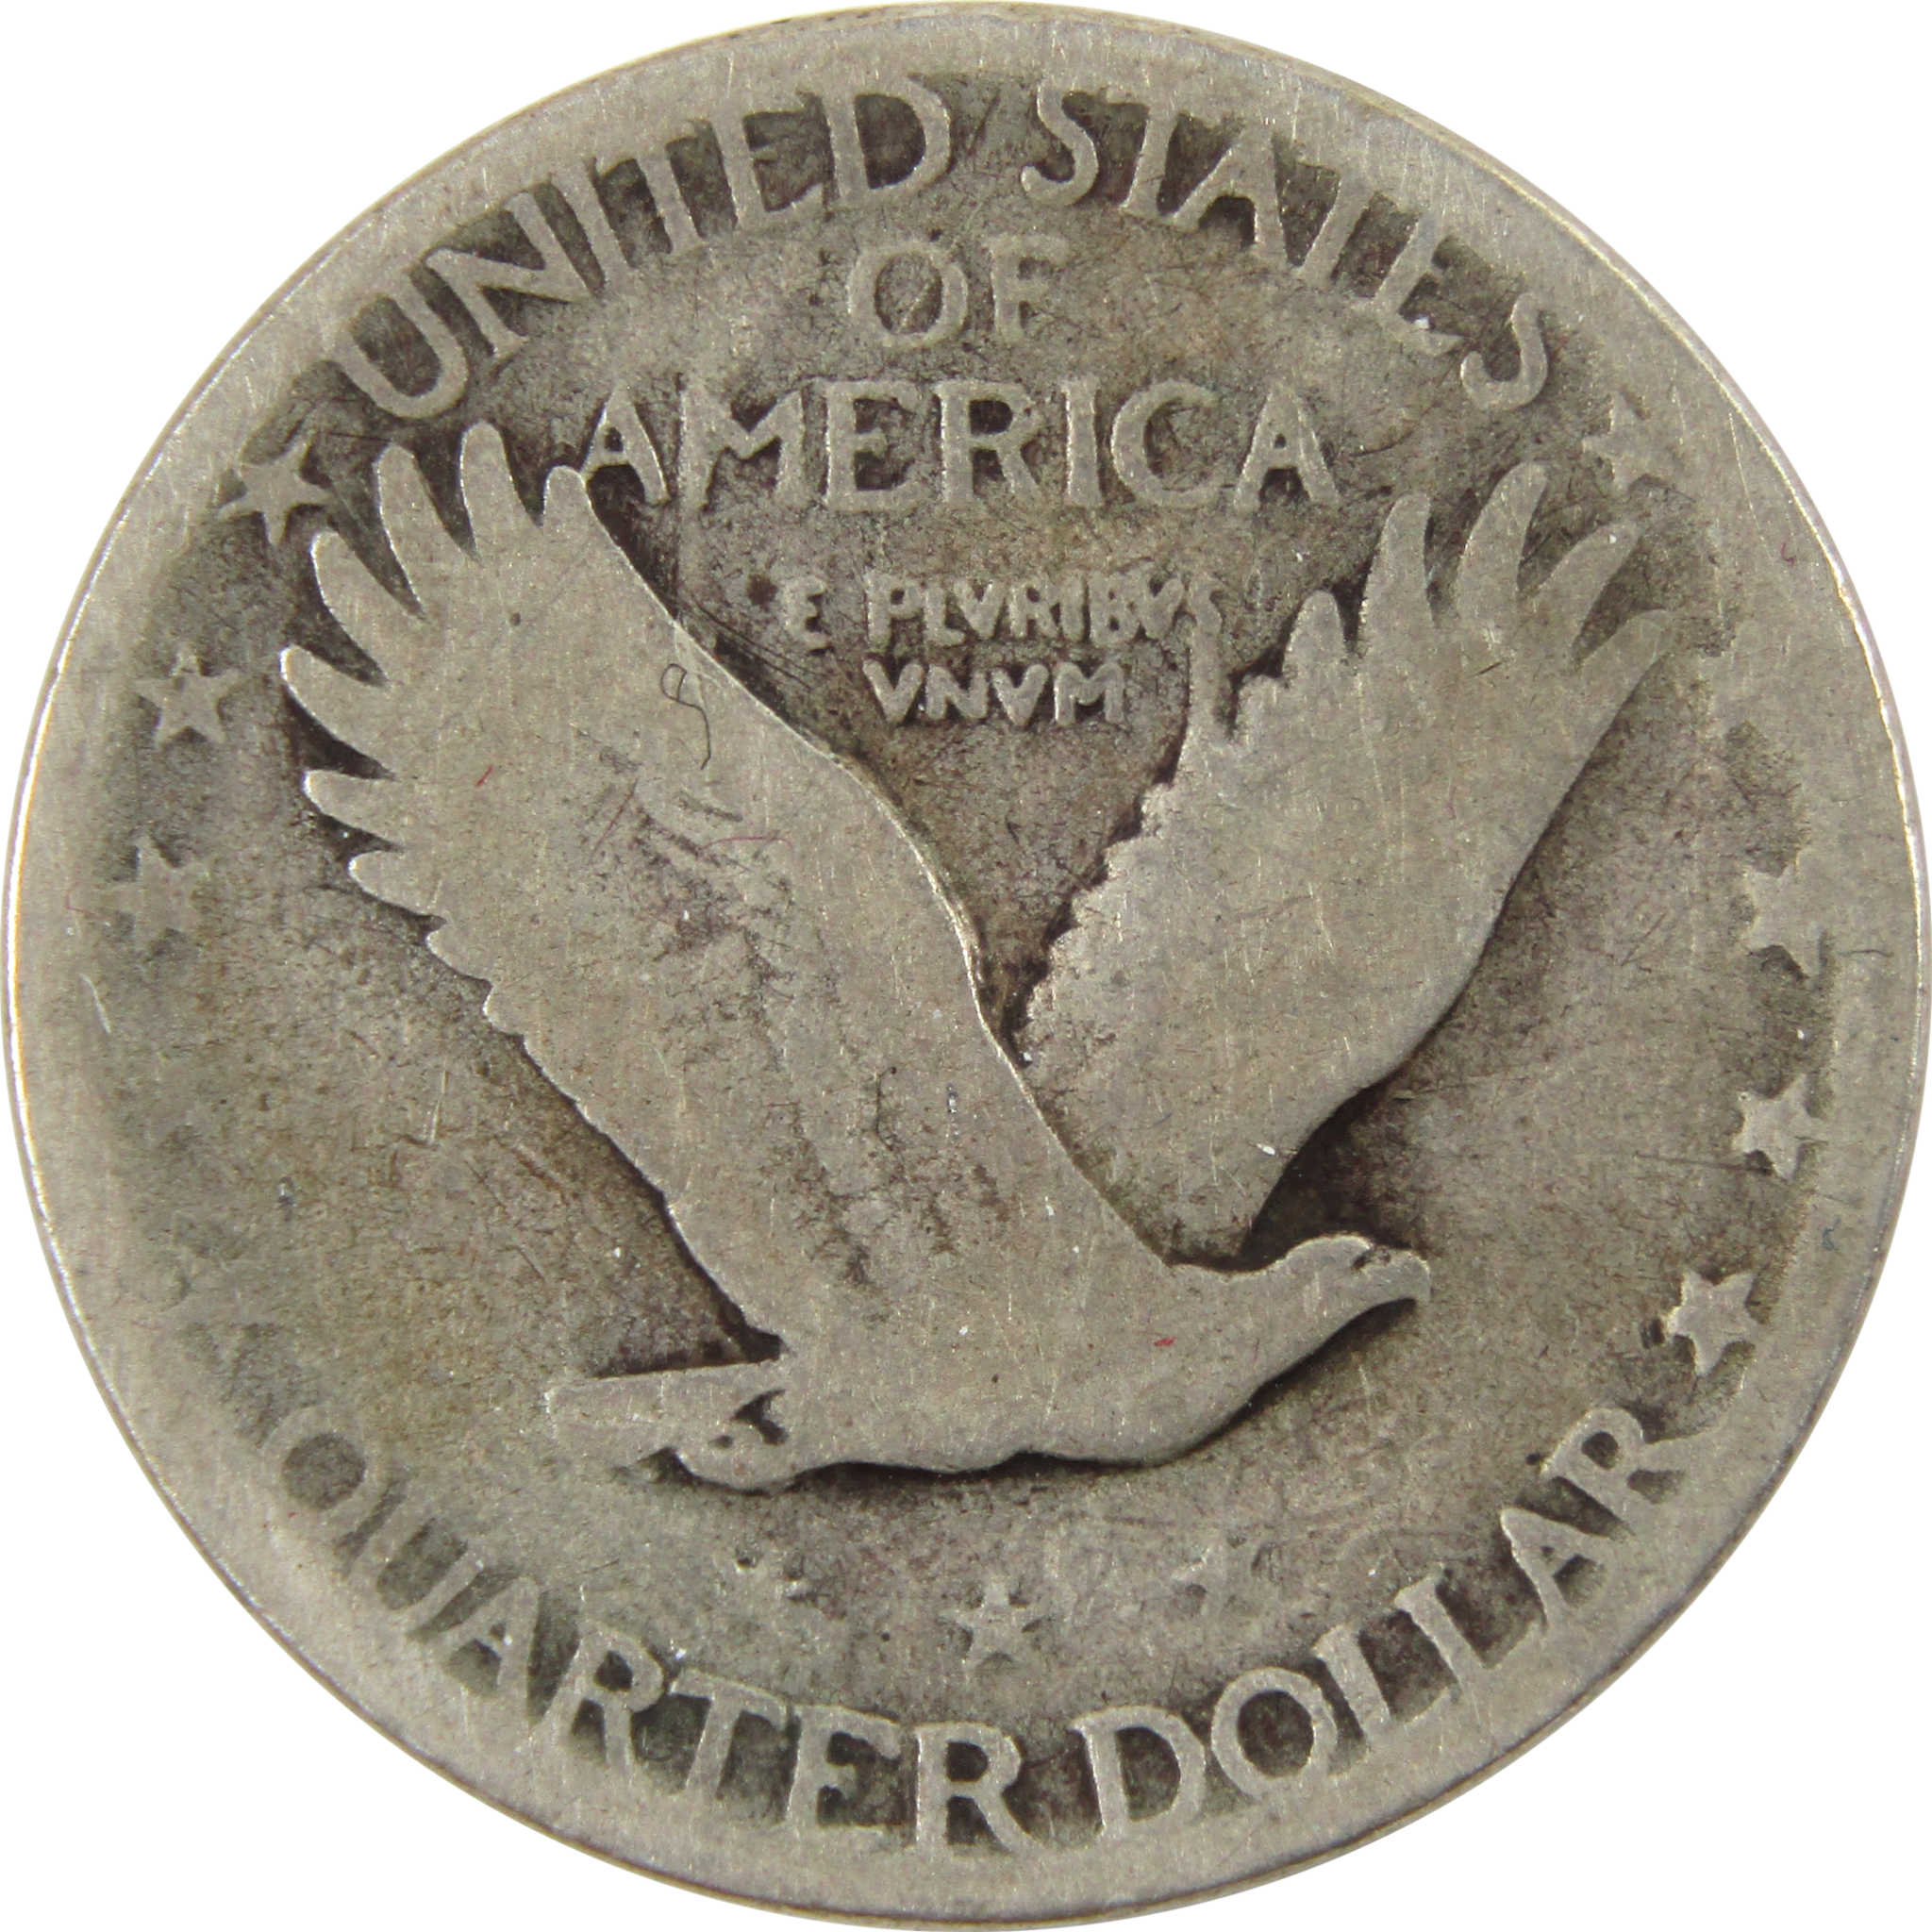 1927 S Standing Liberty Quarter G Good 90% Silver 25c Coin SKU:I9914